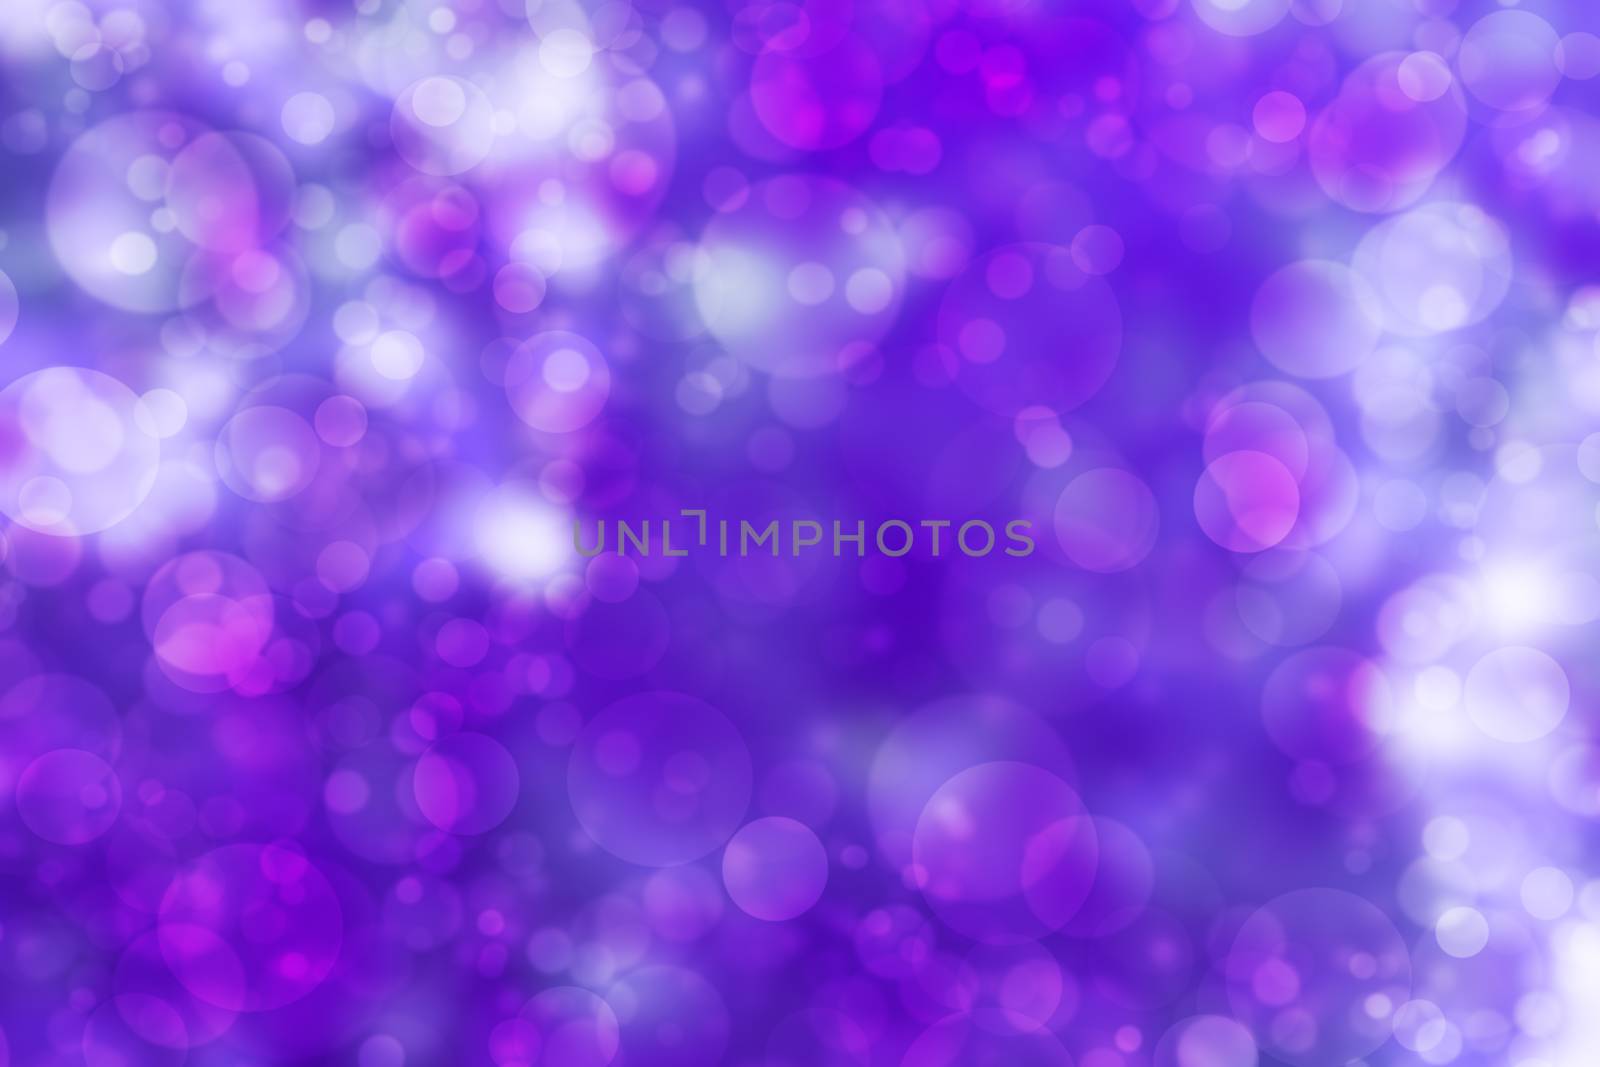 Beautiful purple bokeh abstract background, filter image